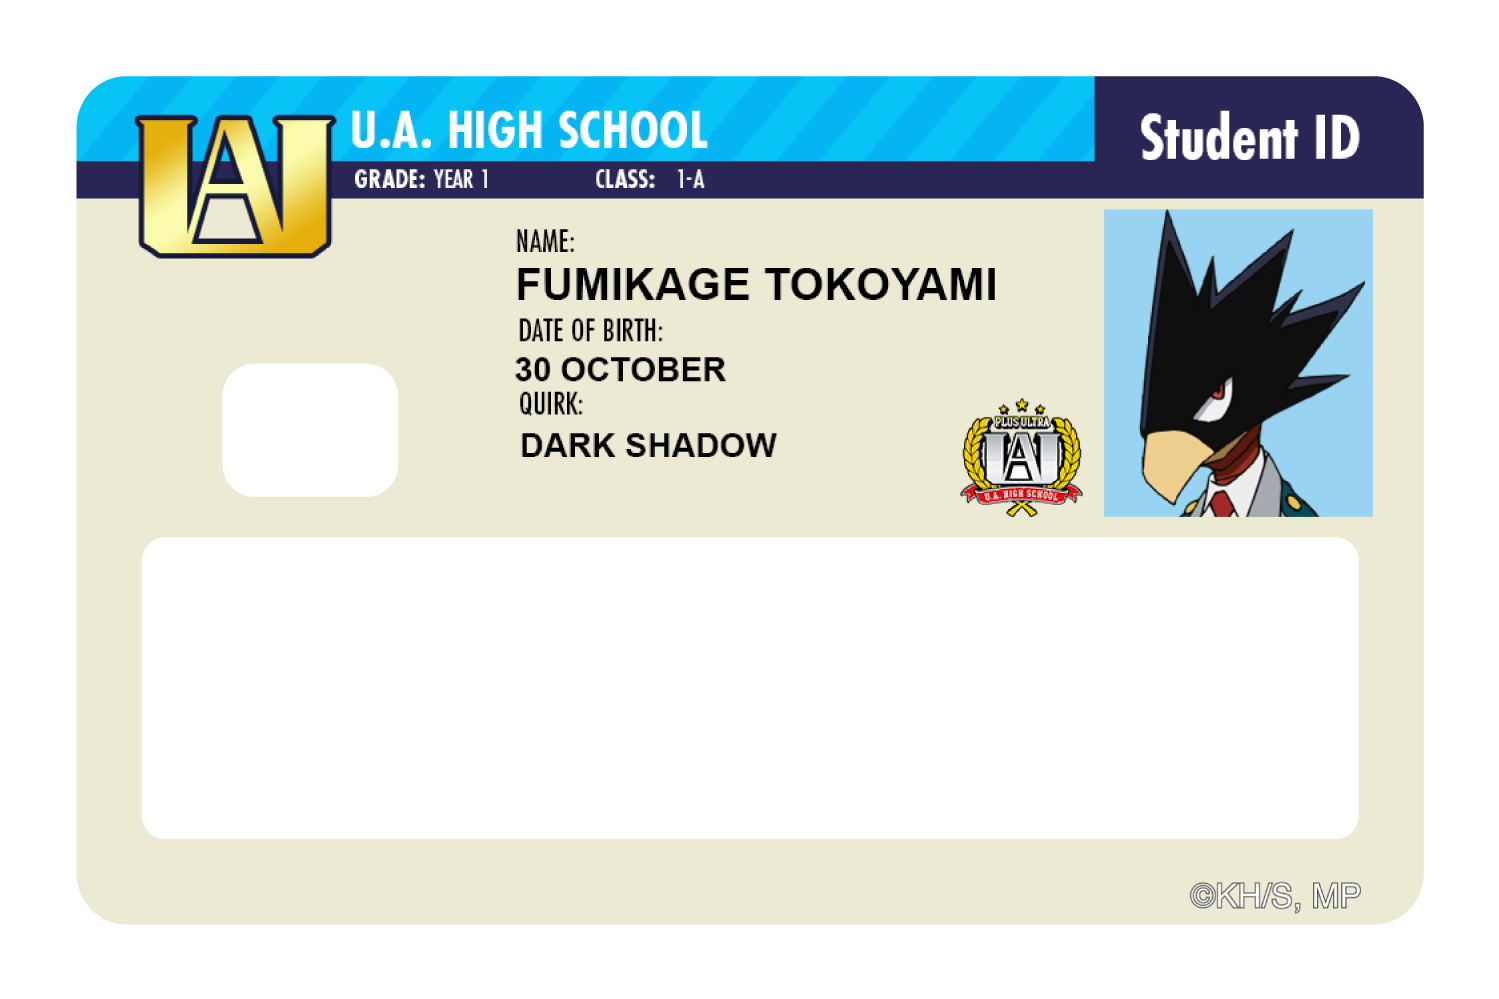 Student ID - Fumikage Tokoyami